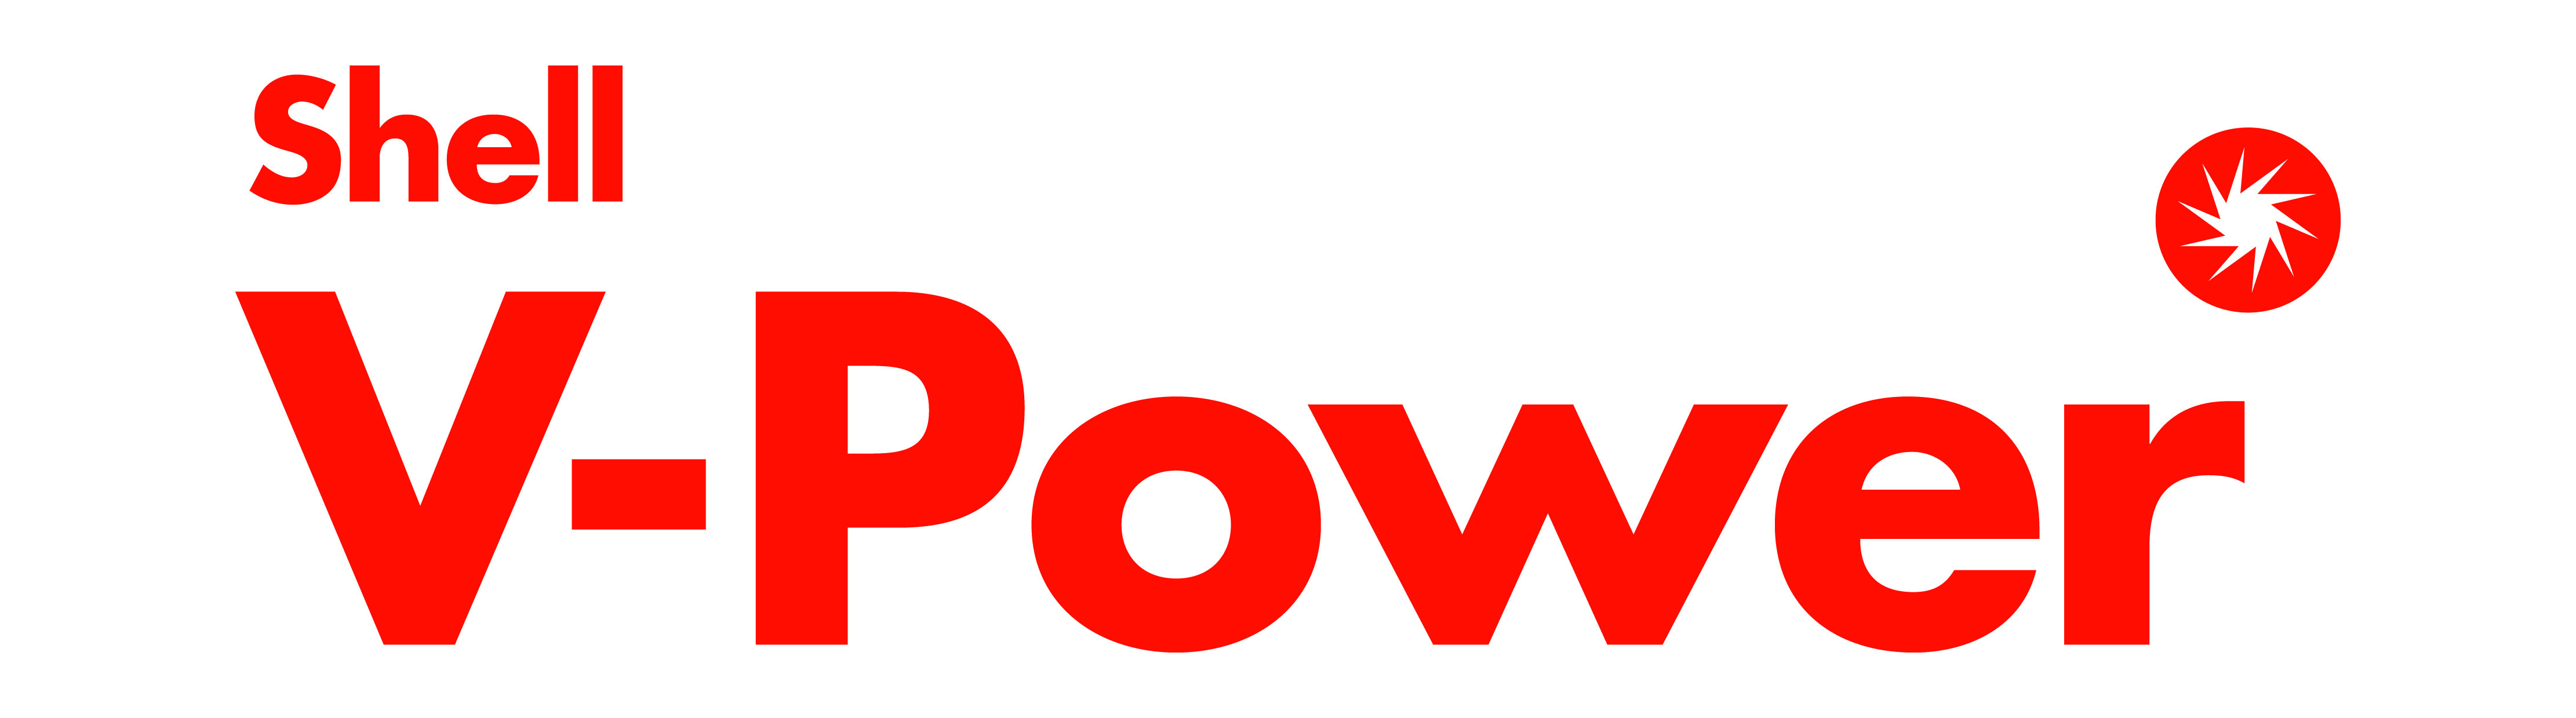 Shell V Power Logo photo - 1